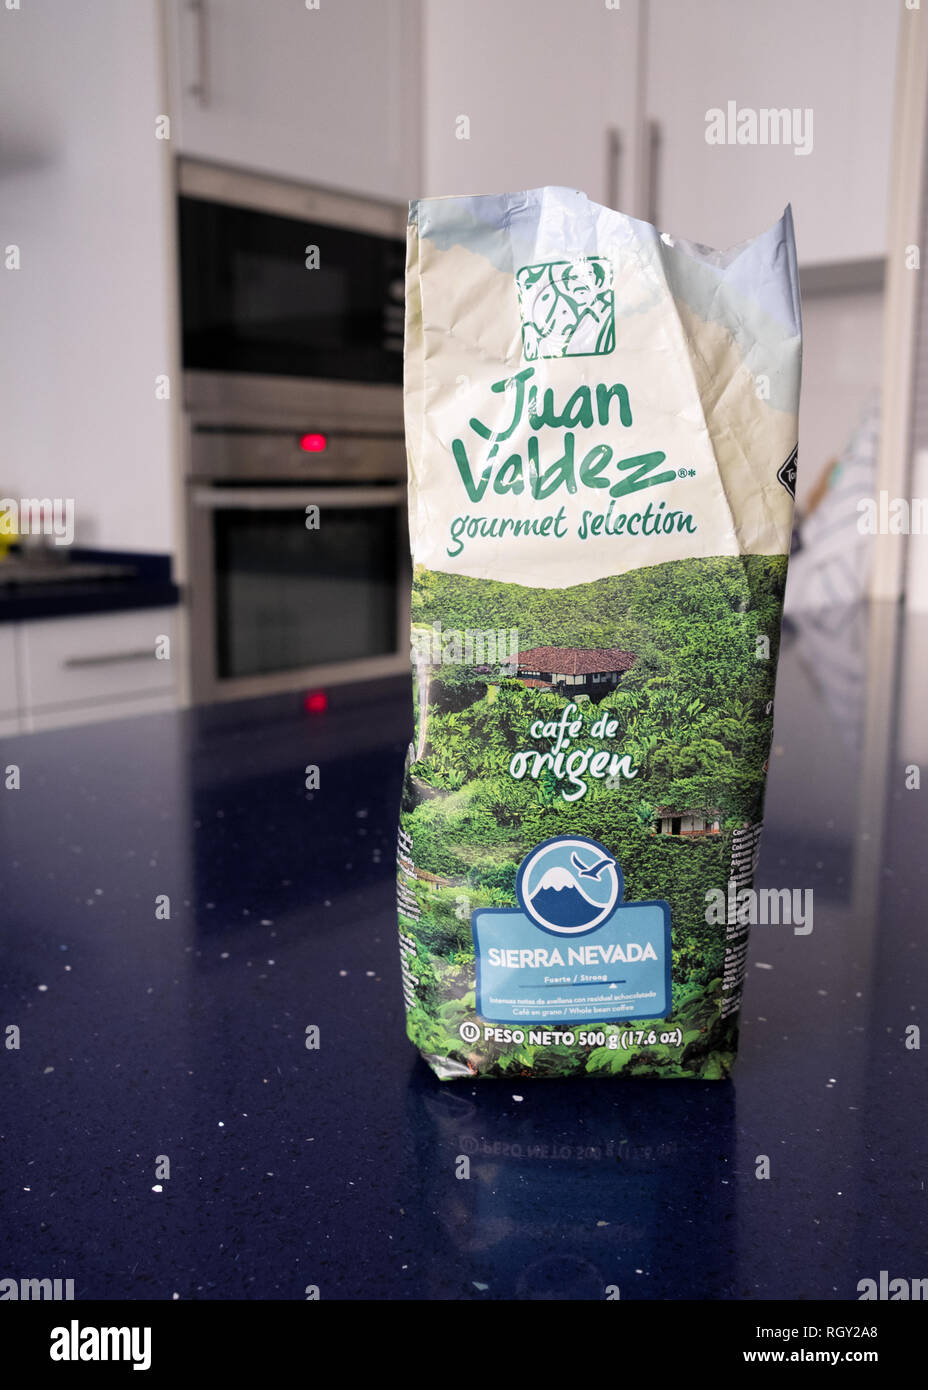 Juan Valdez gourmet selection café de origen Sierra Nevada premium colombian coffee package in a modern kitchen worktop Stock Photo